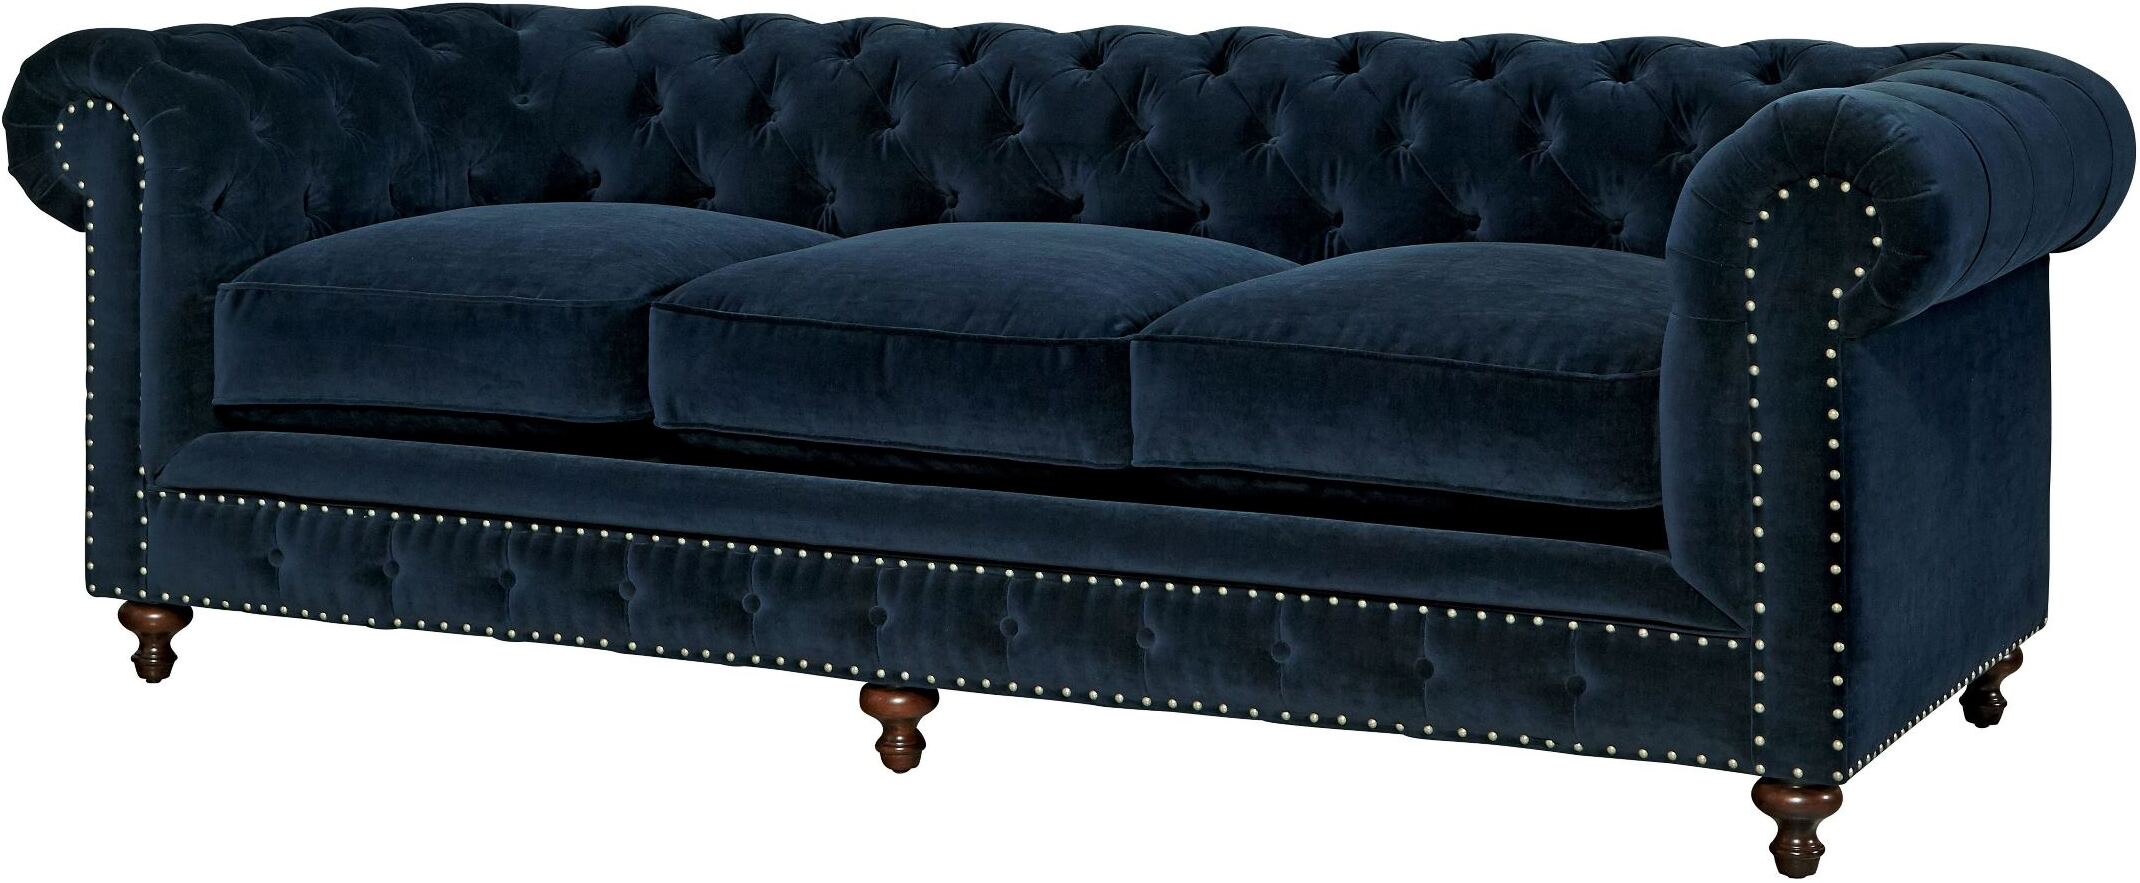 Universal Berkeley Sumatra Blue Velvet Sofa - Berkeley Collection: 2